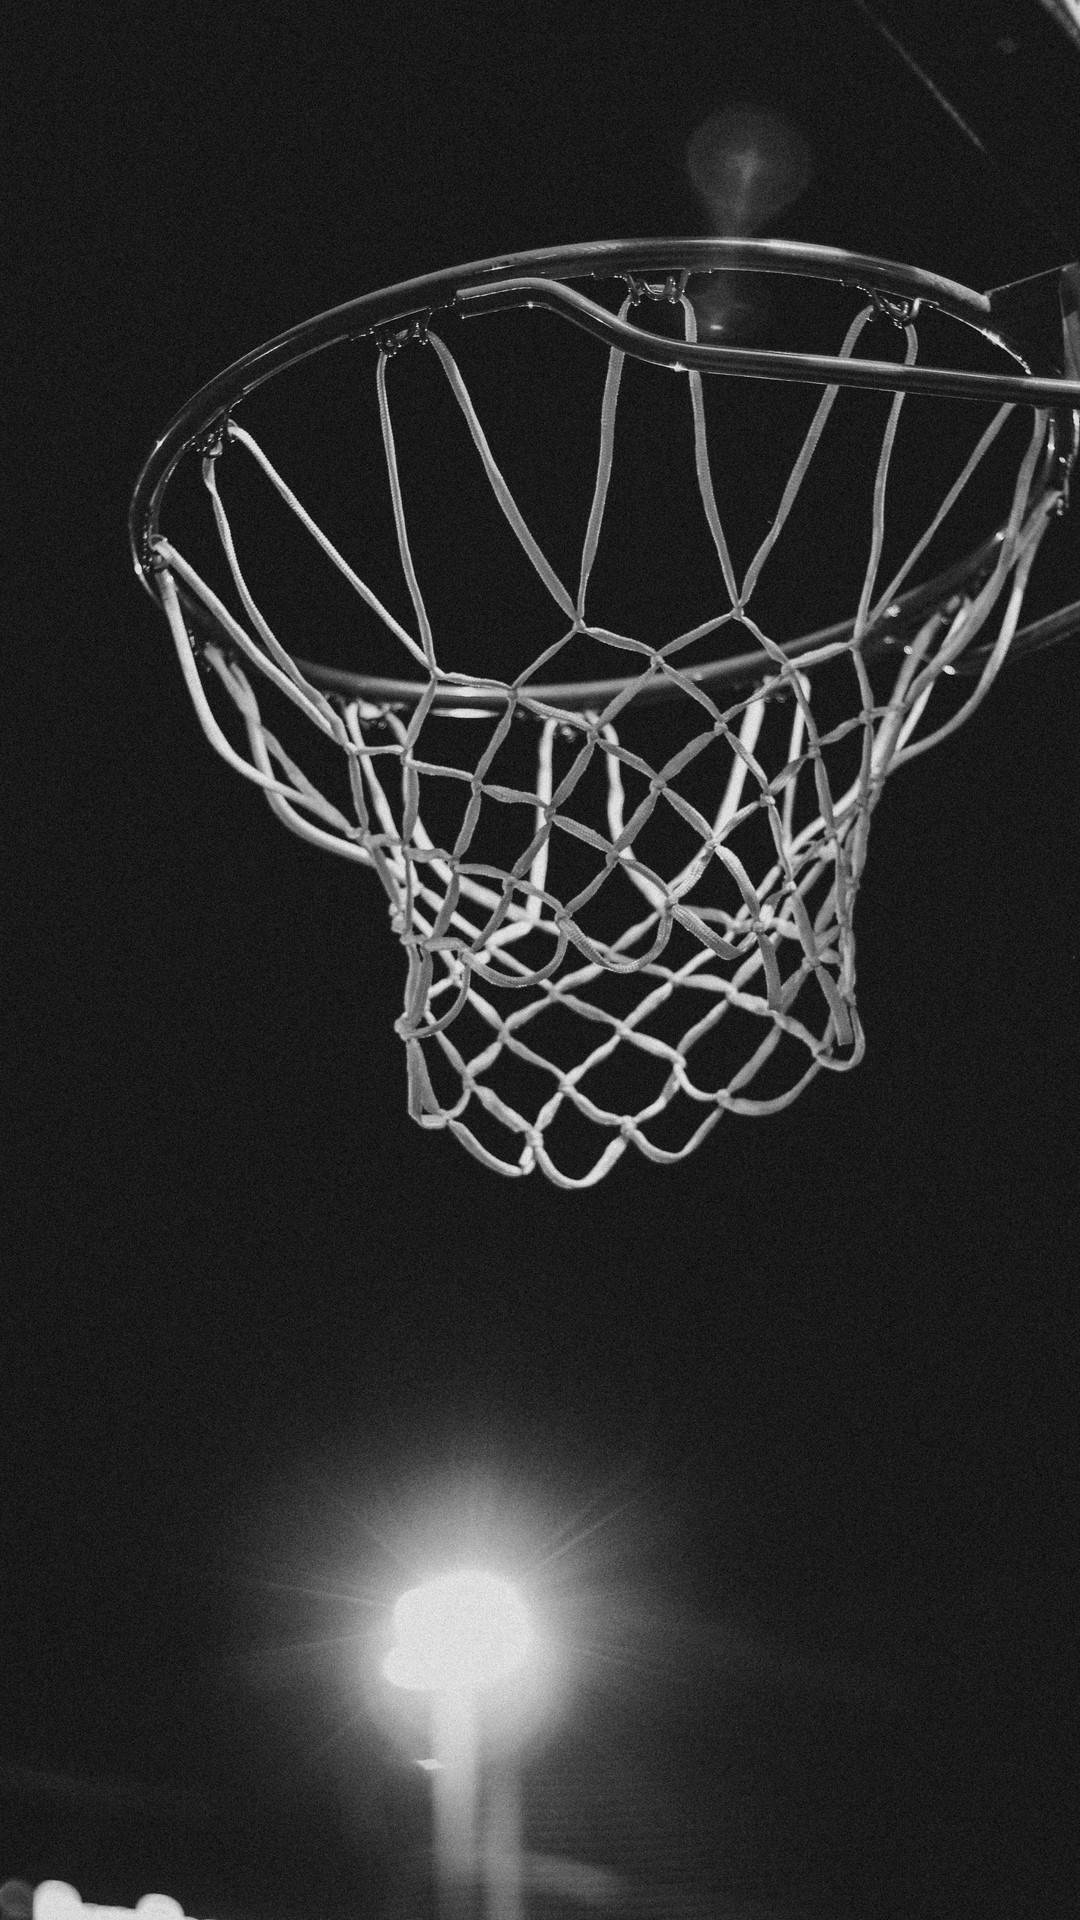 Aesthetic Basketball Ring Cool Basketball Iphone Wallpaper